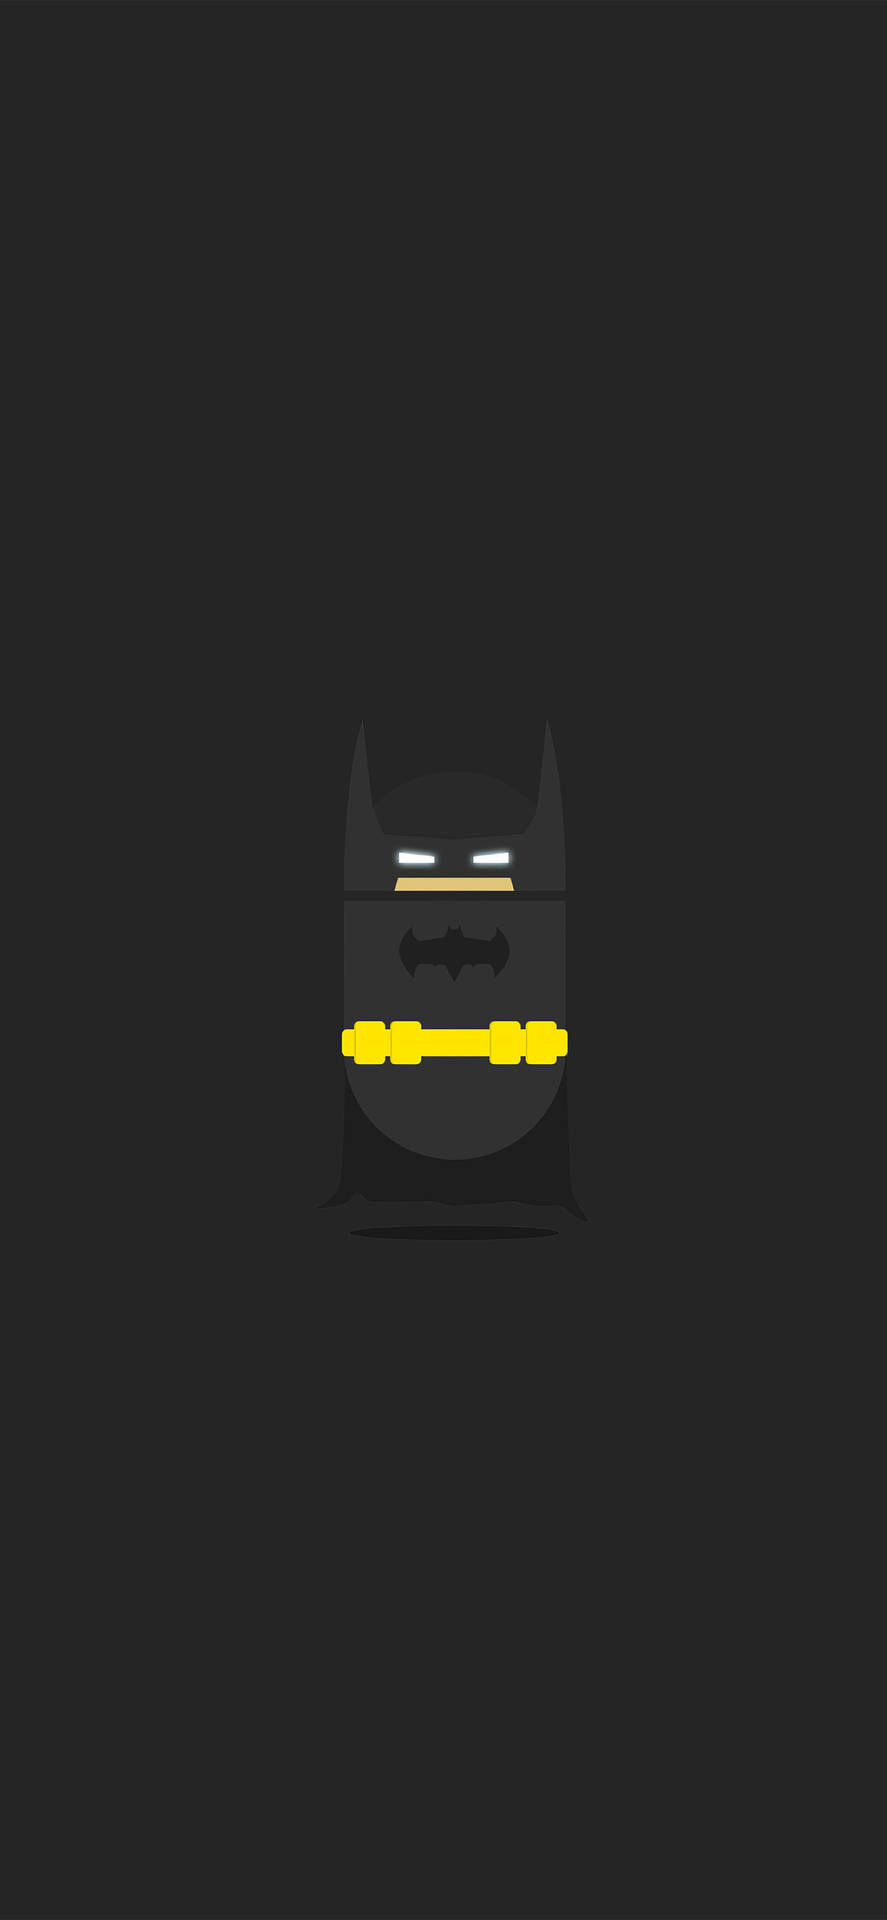 Lego Batman Minimal Dark Iphone Wallpaper